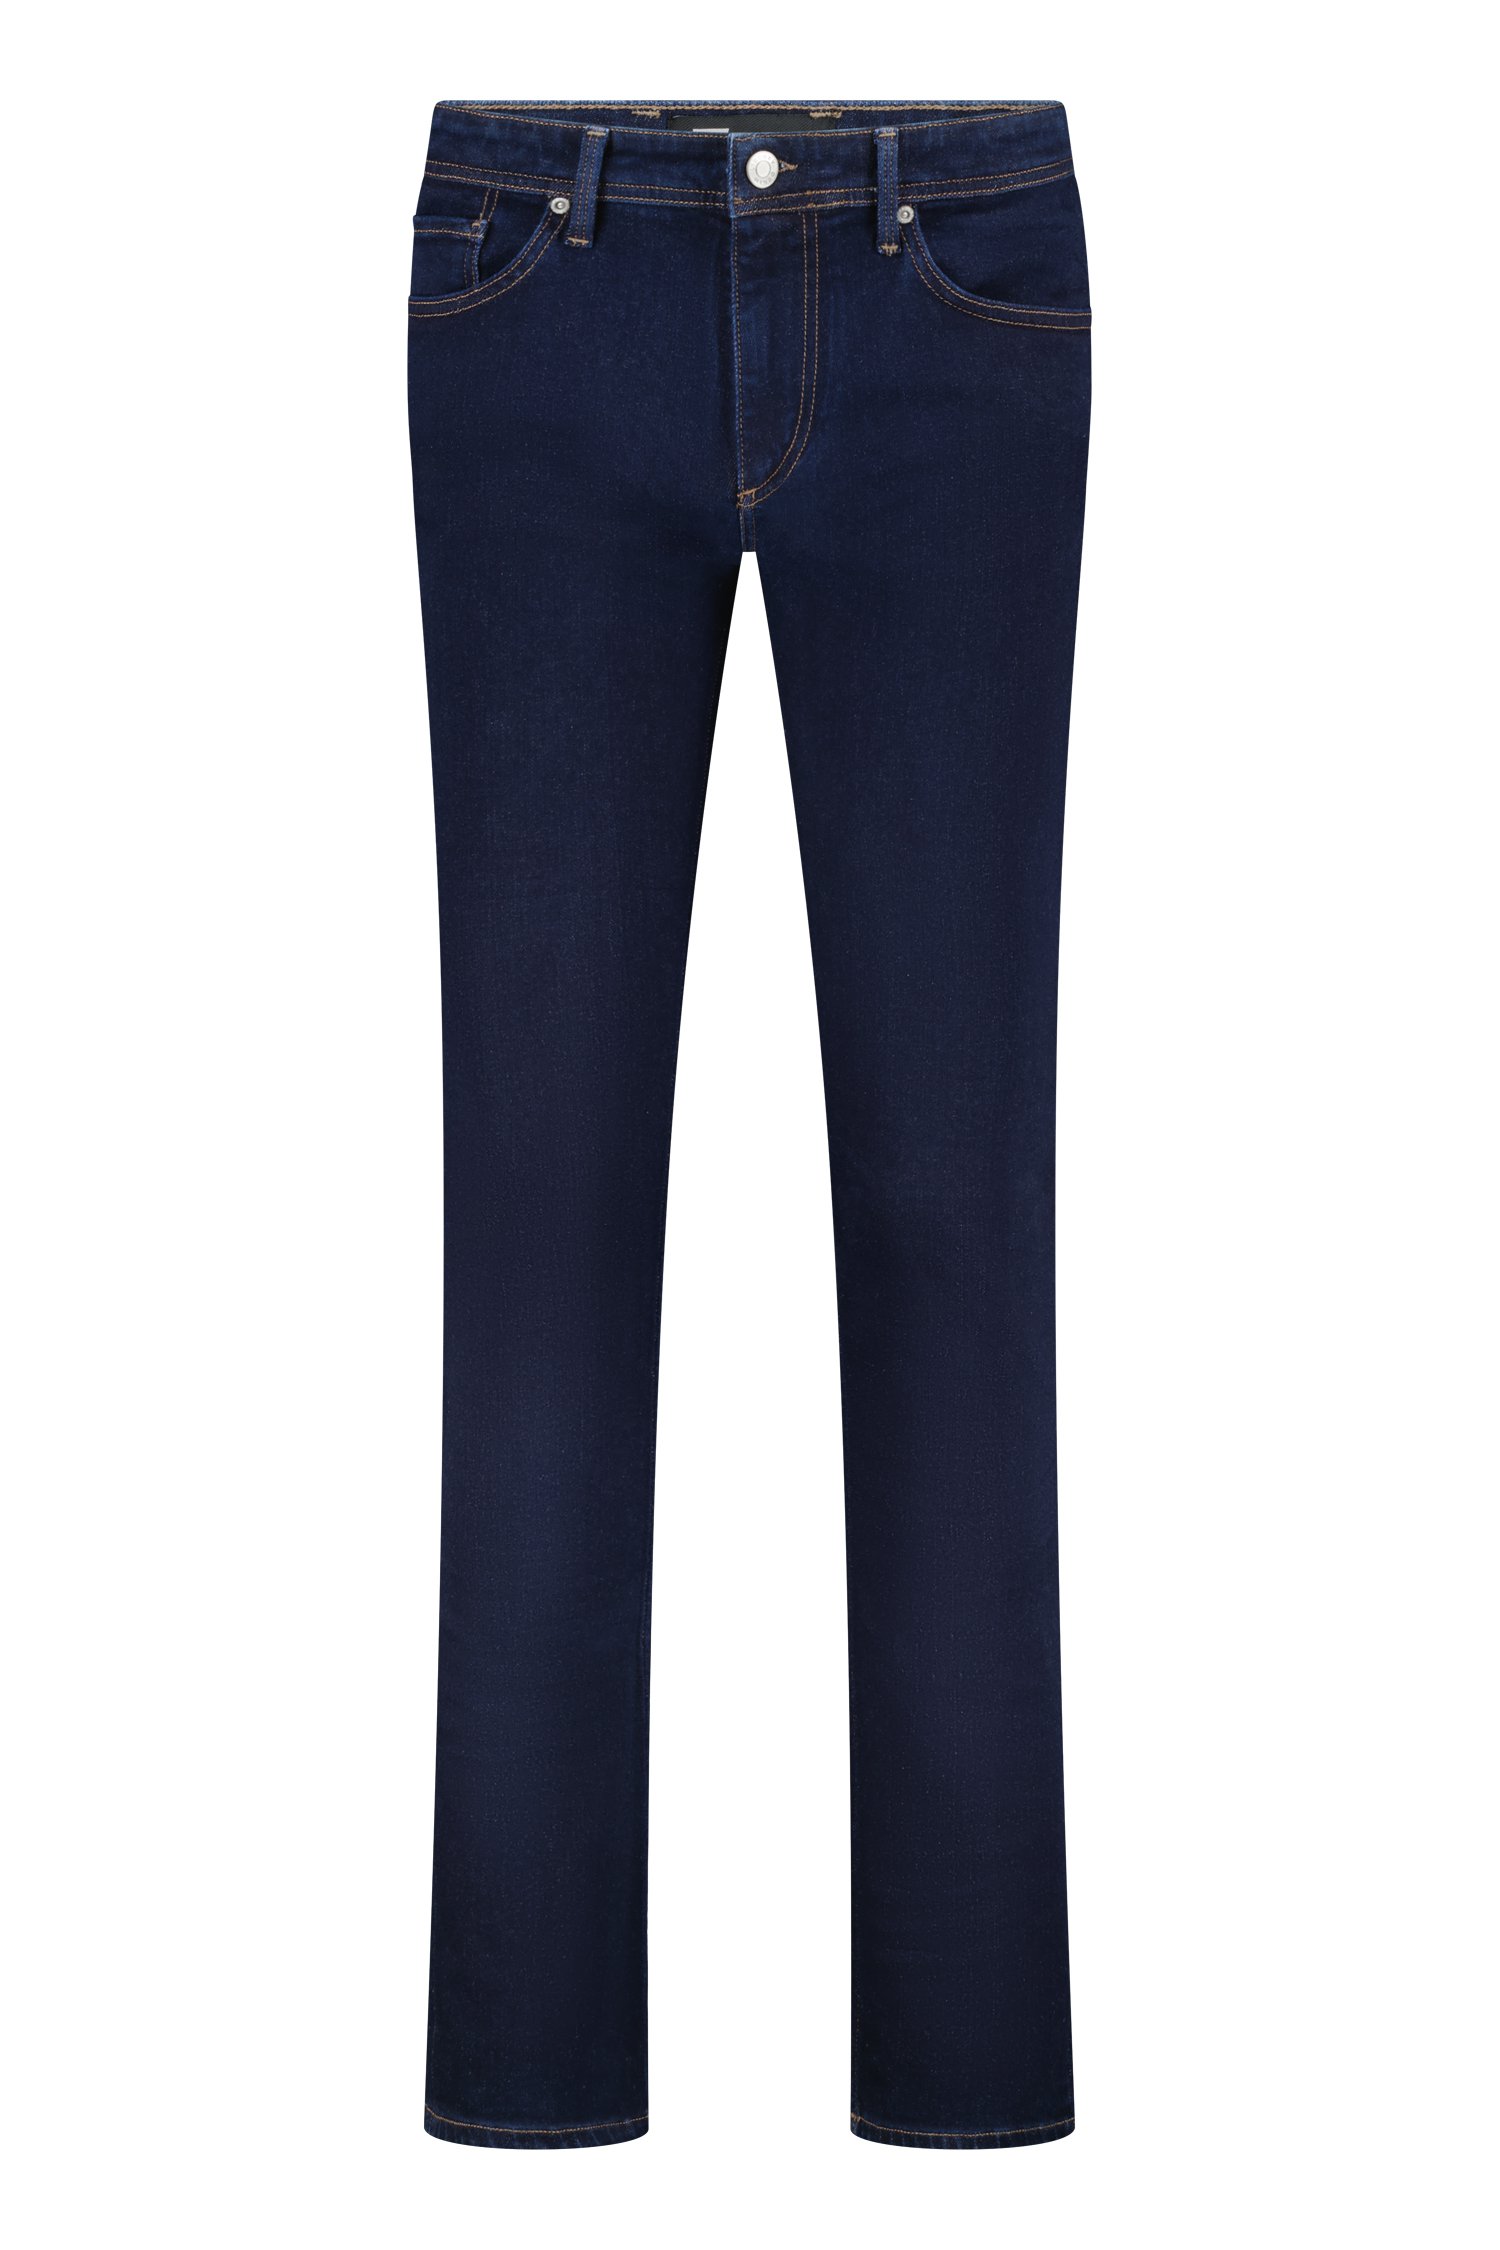 Donkerblauwe jeans - Lars - slim fit - L32 van Liberty Island Denim voor Heren